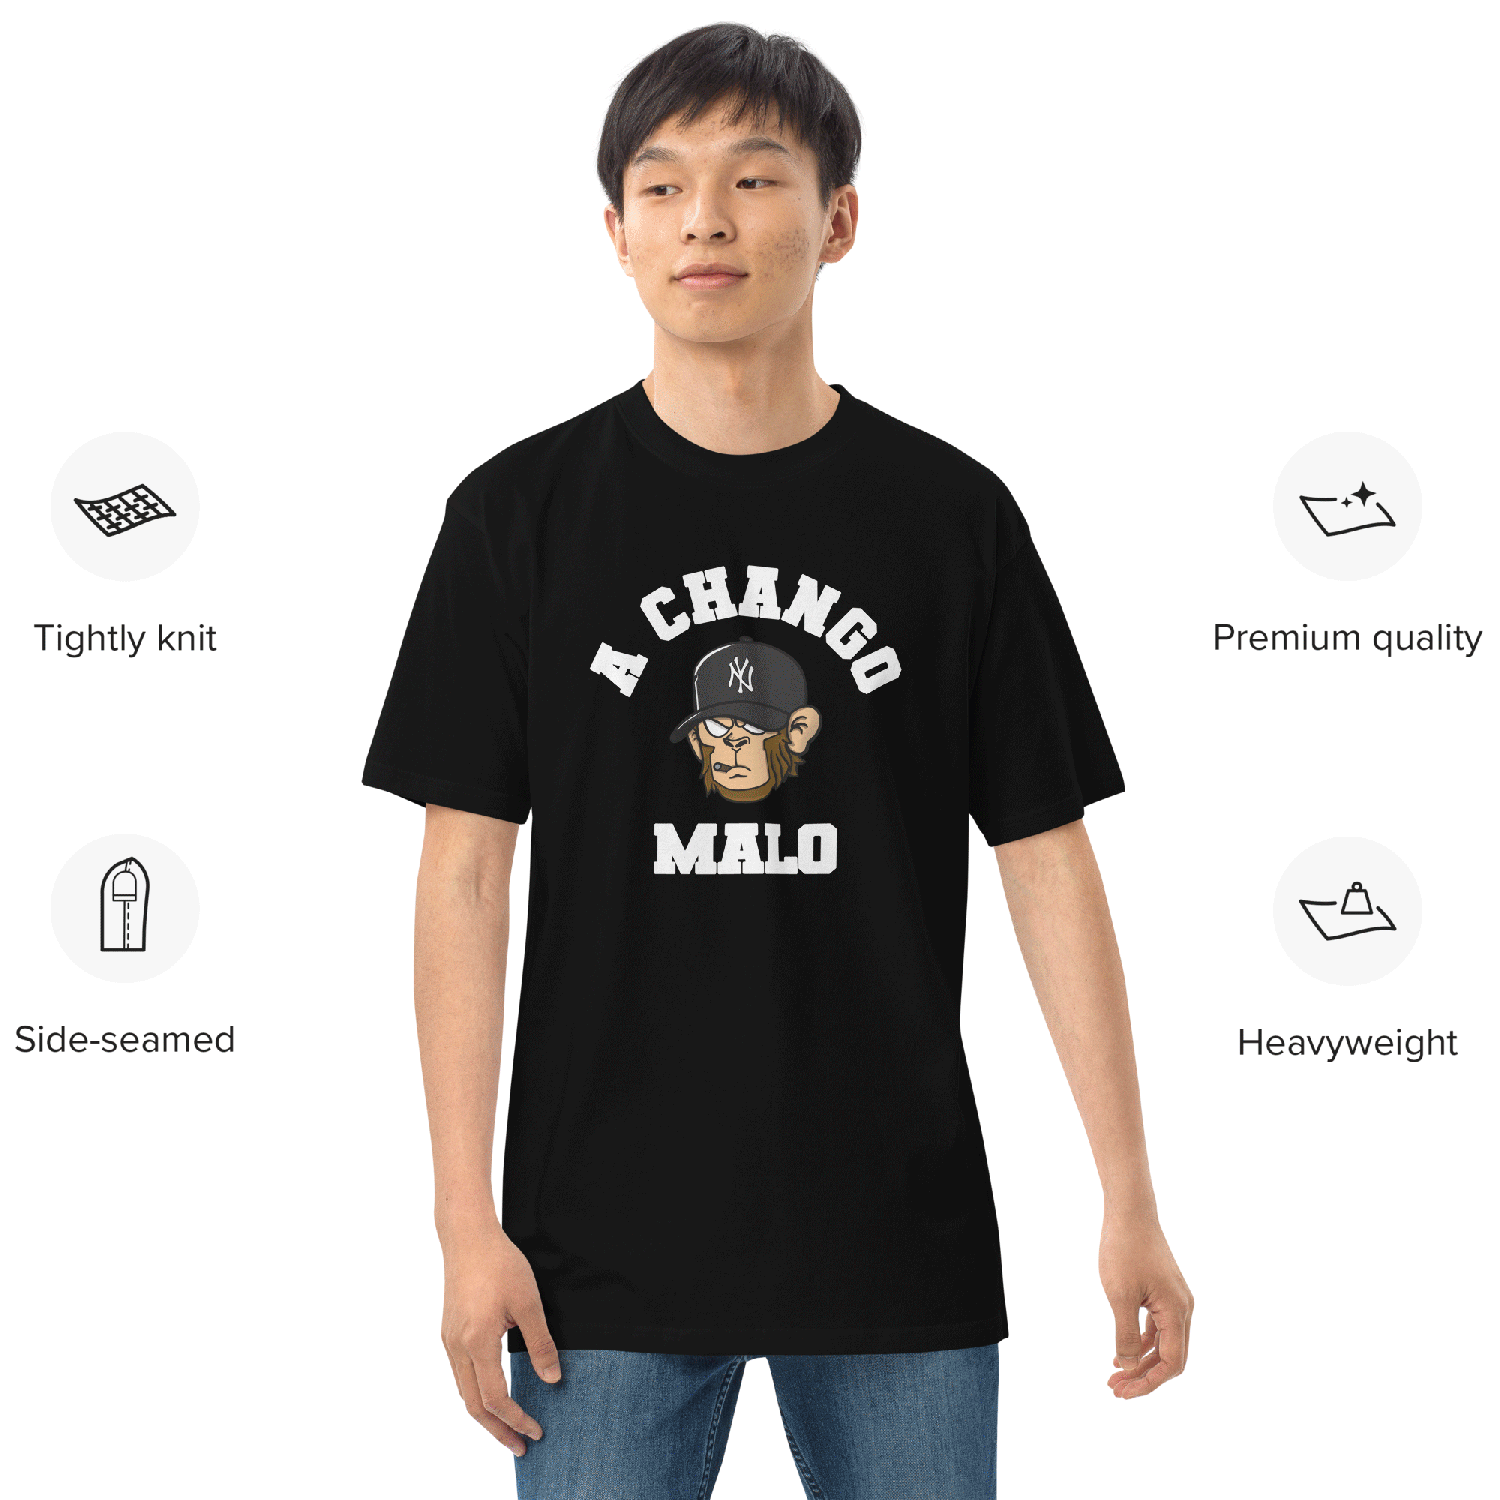 Image of "A Chango Malo" T-shirt